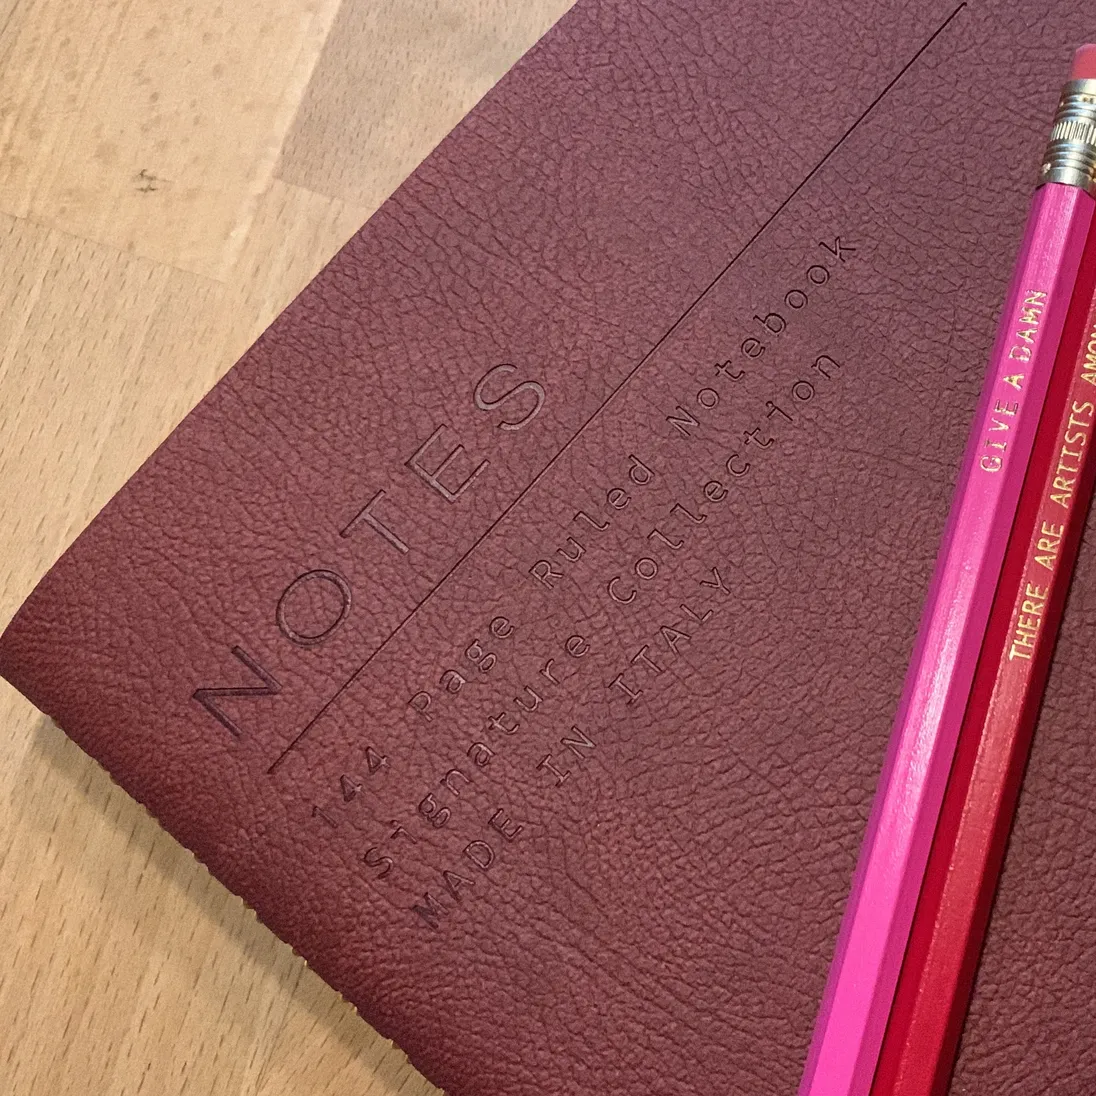 notebooks.jpg